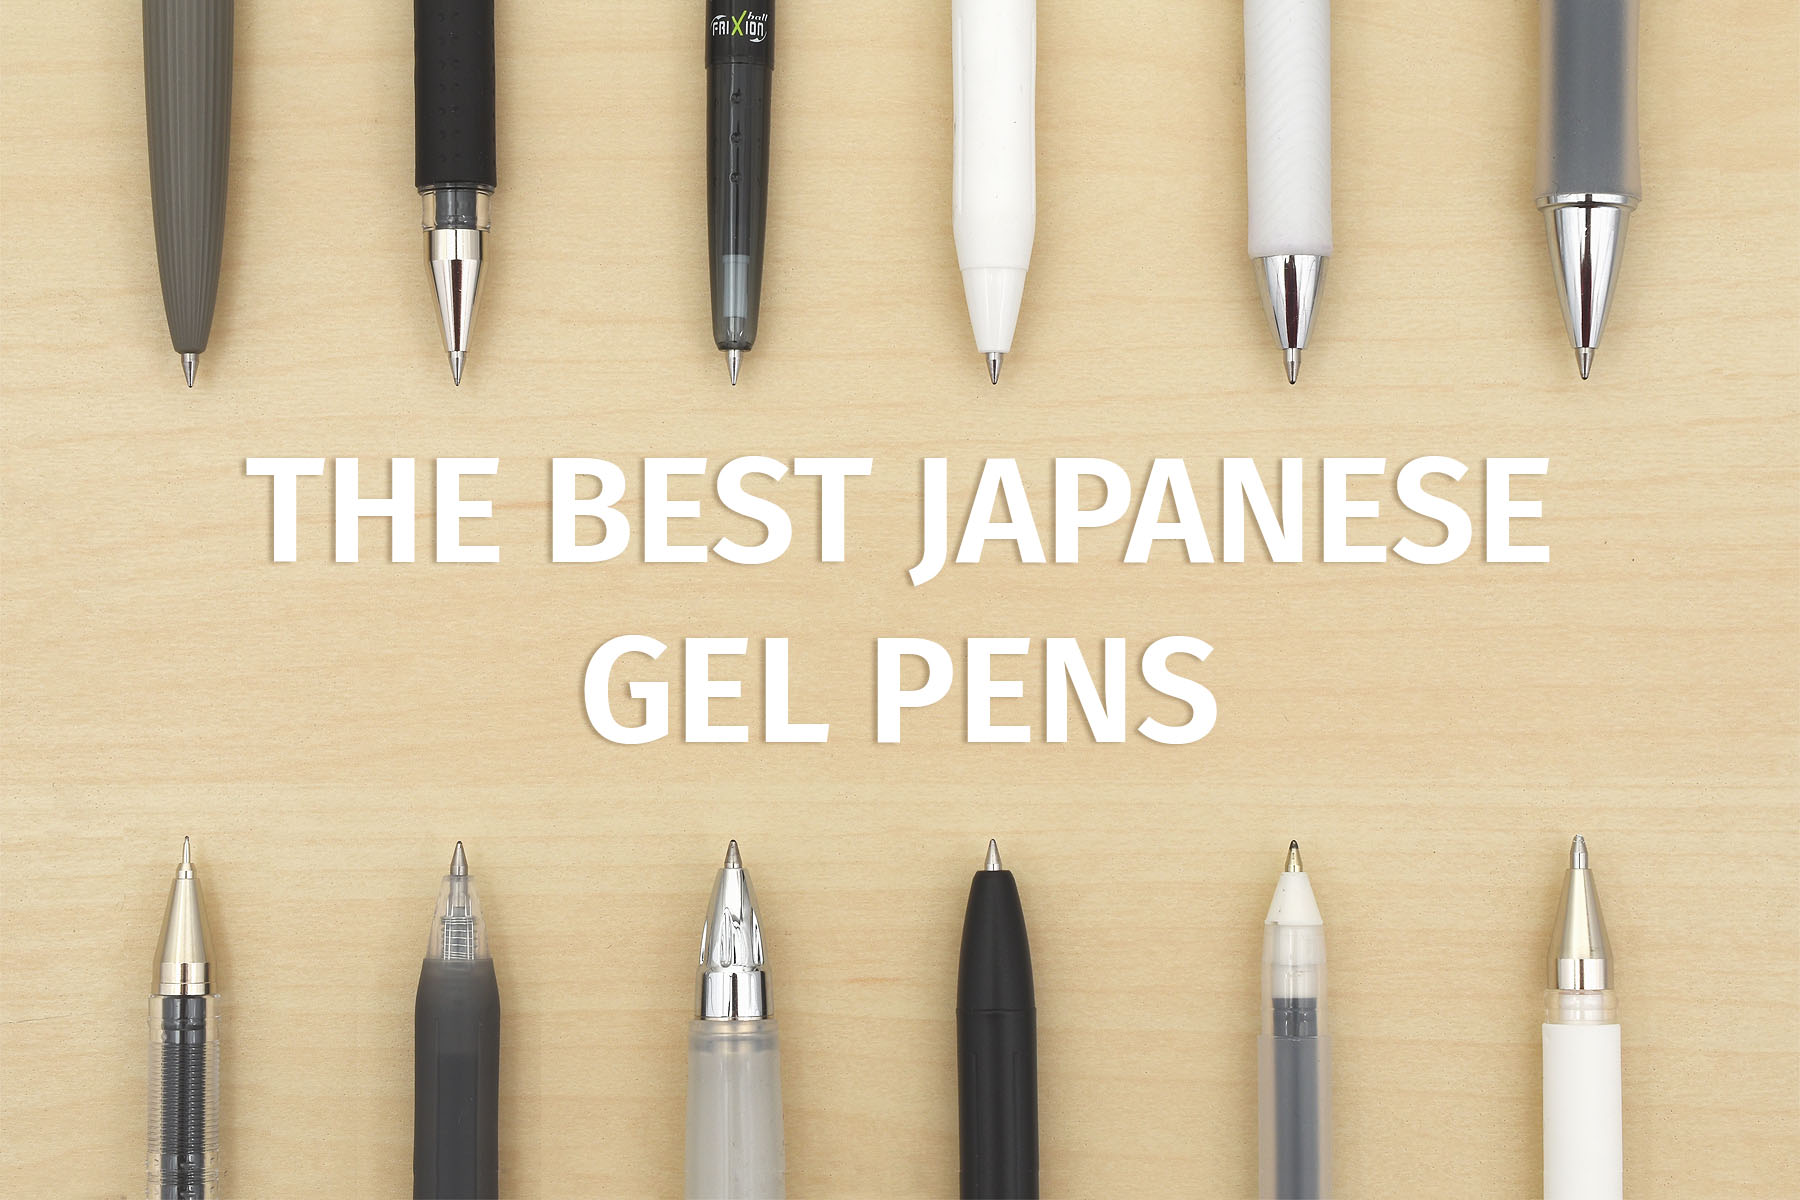 Felt Tip Pens drawing Pens waterproof Pen art Pens fineliner - Temu